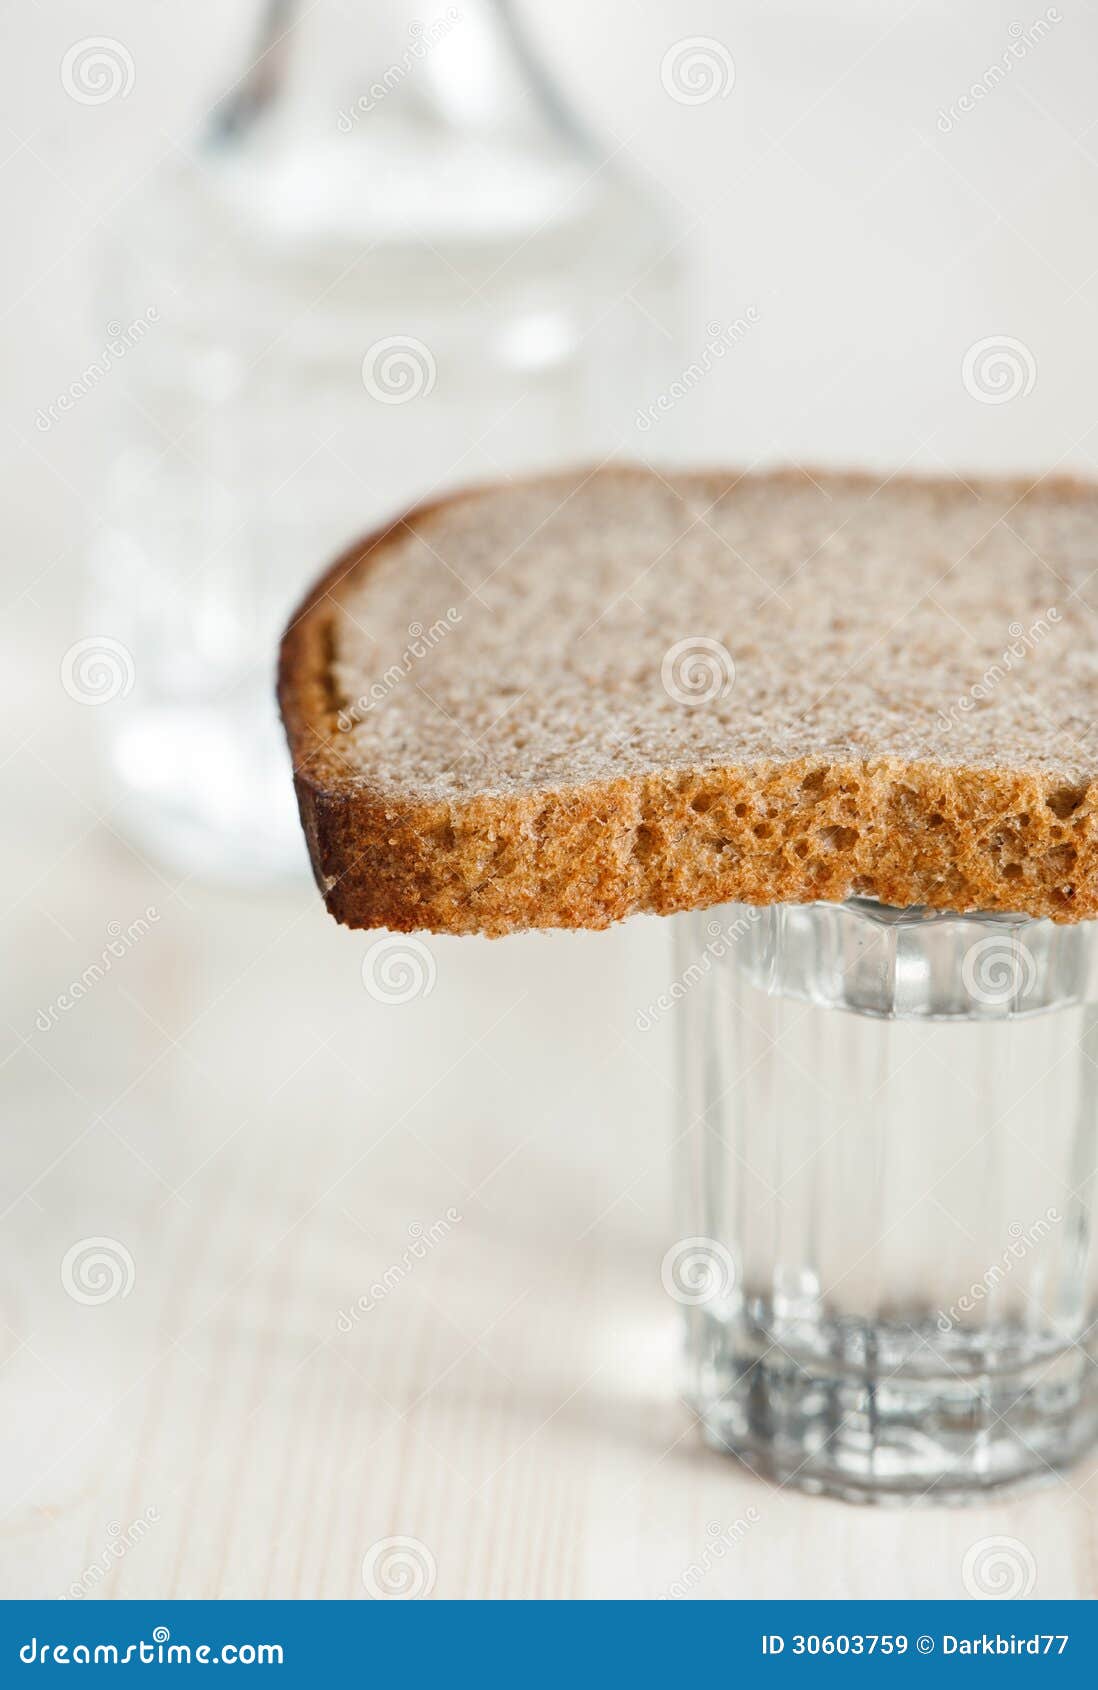 Ставят стакан воды и хлеб. Стакан с хлебом. Стопка с хлебом. Рюмка с хлебом. Стакан и кусок хлеба.